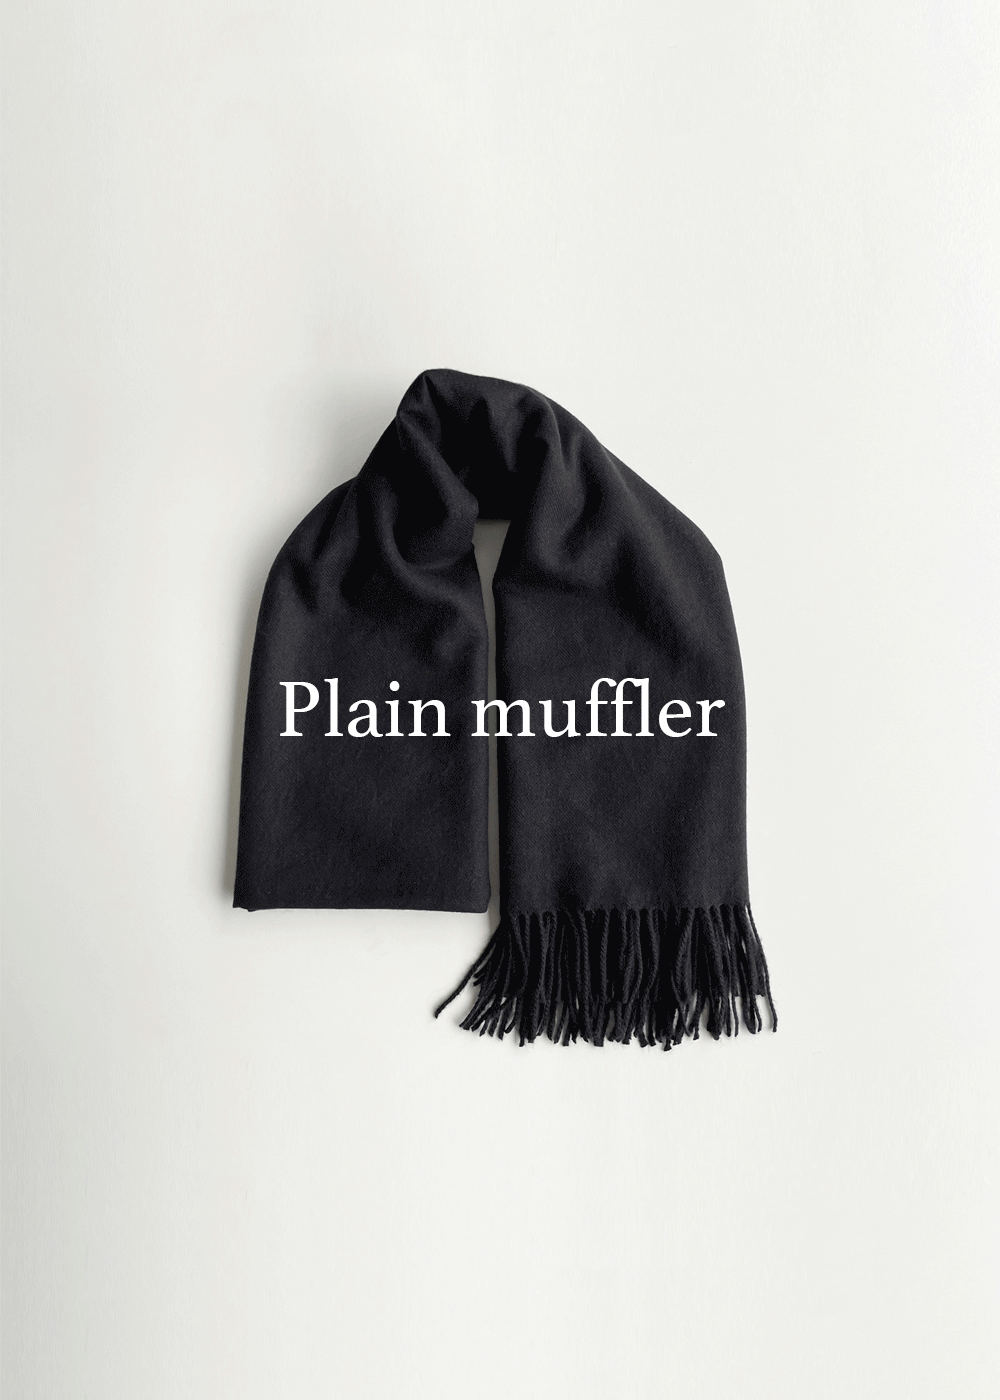 Plain muffler